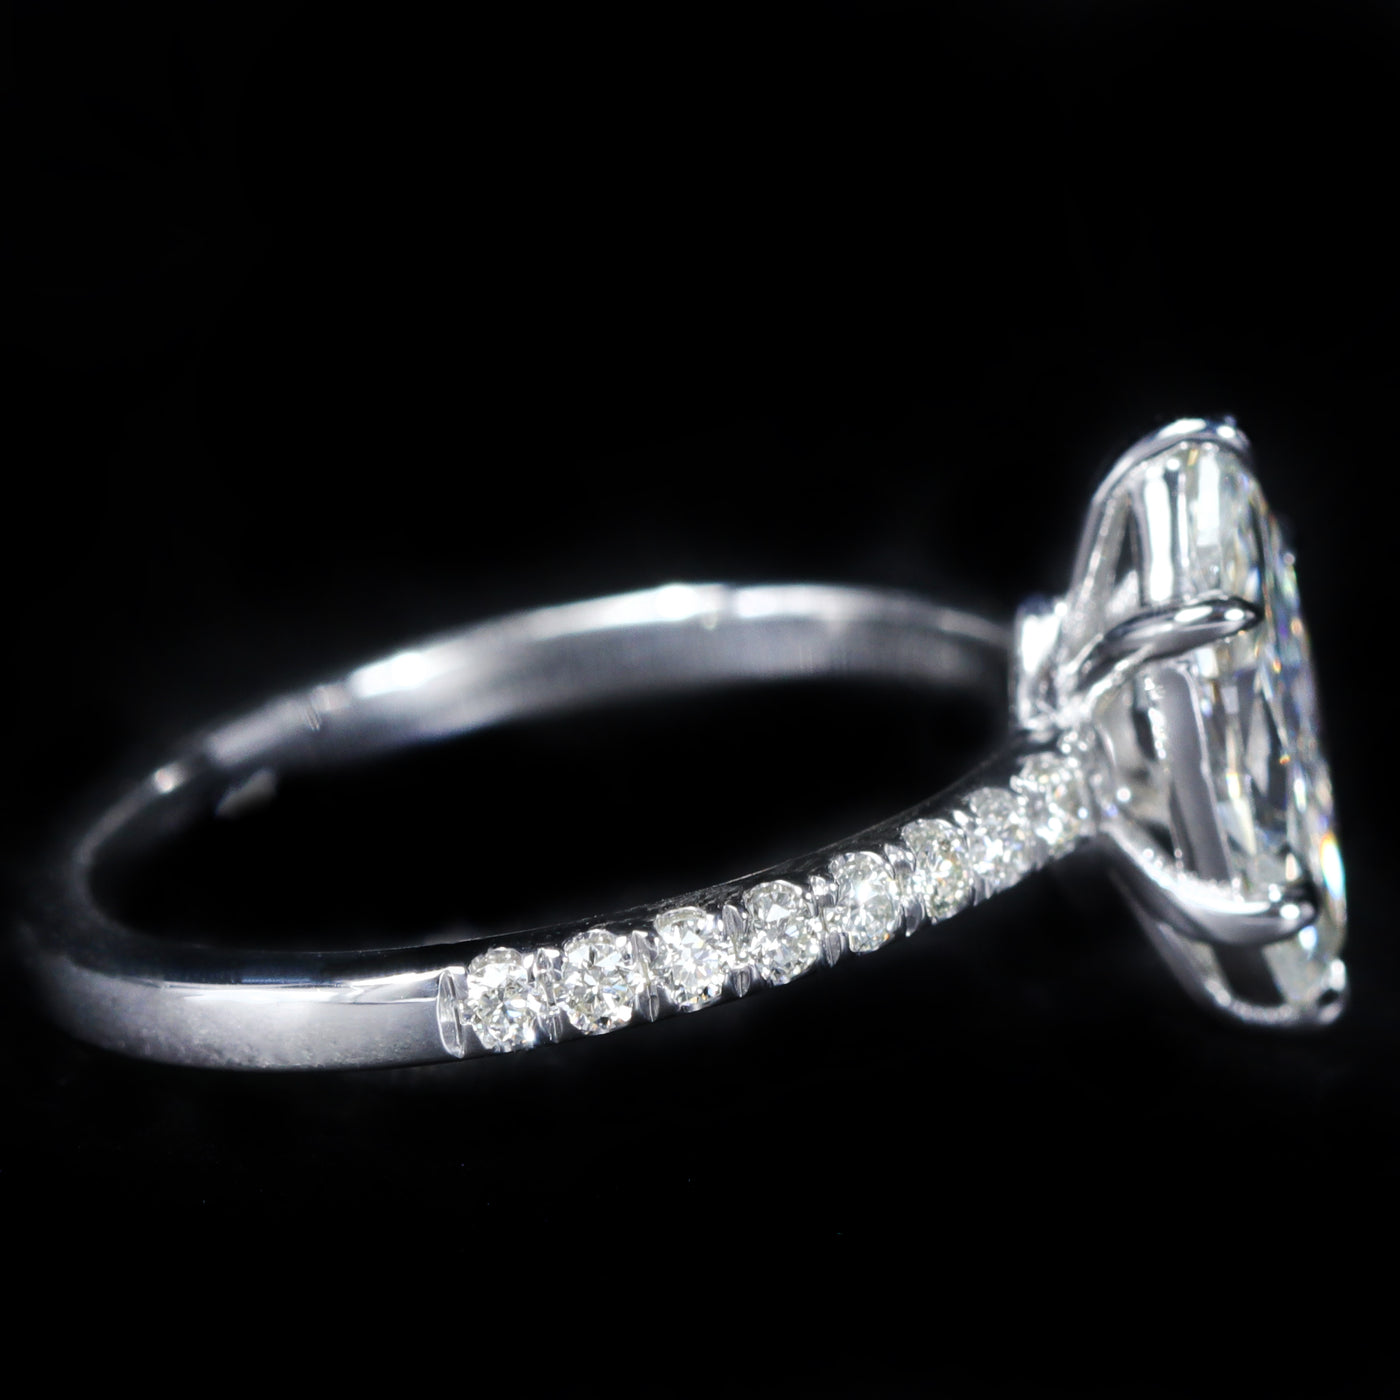 14K White Gold GIA 1.04 Carat Marquise Cut Diamond Engagement Ring